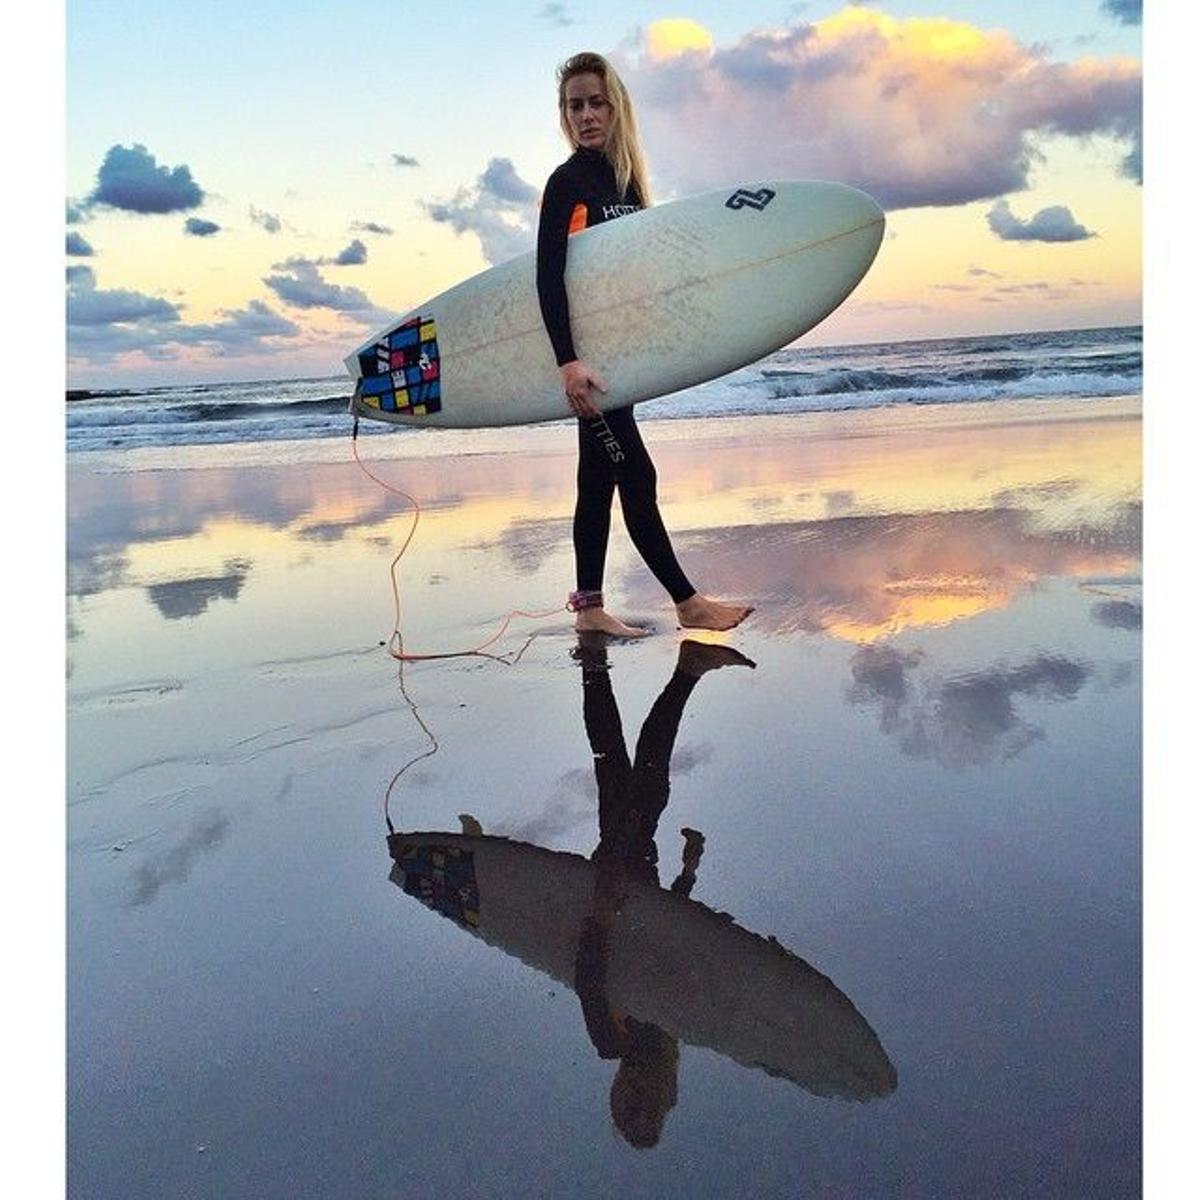 Fit Girls en Instagram, Kira Miró